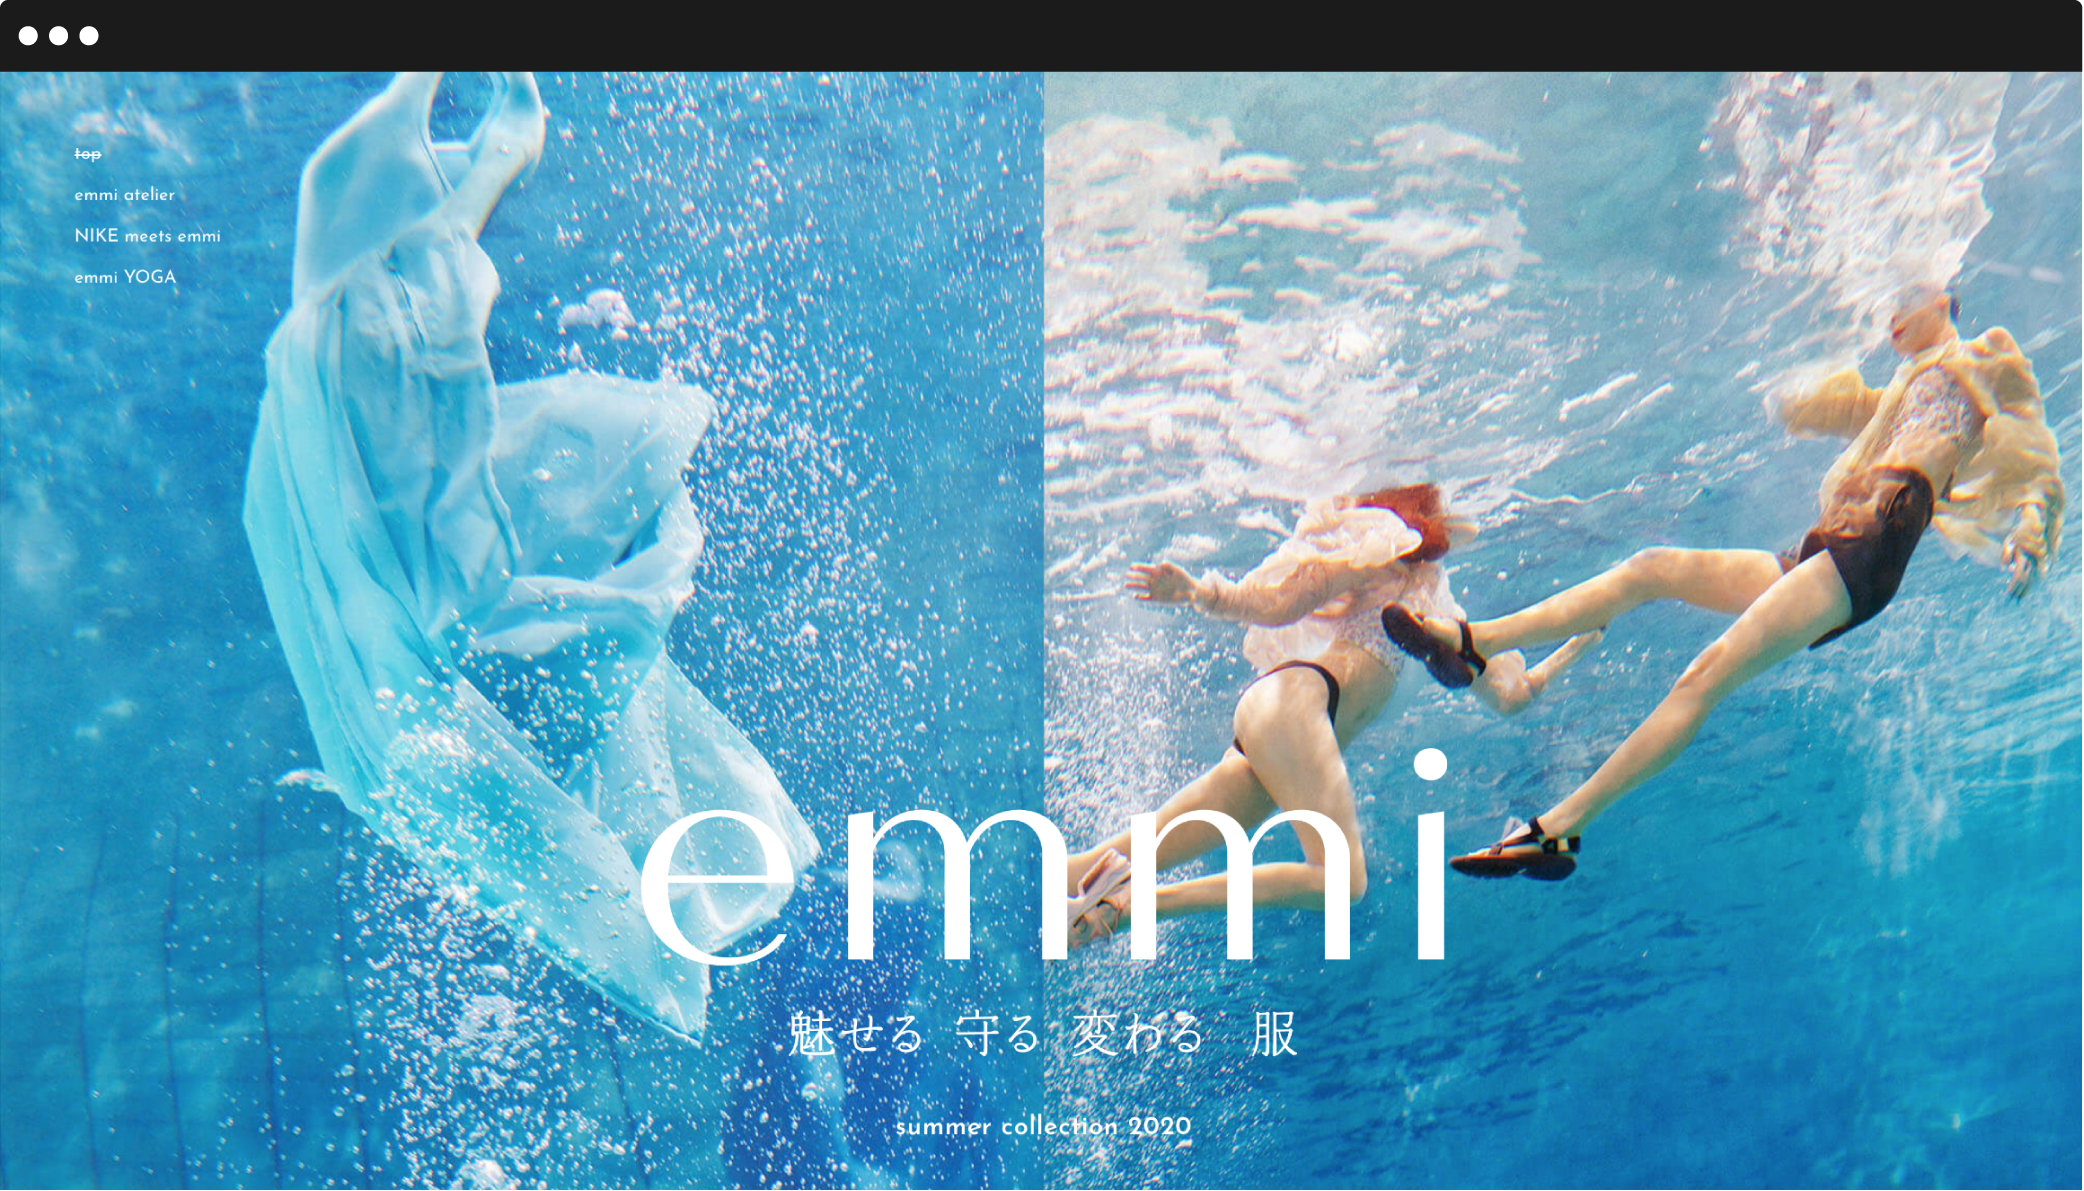 emmi summer collection 2020